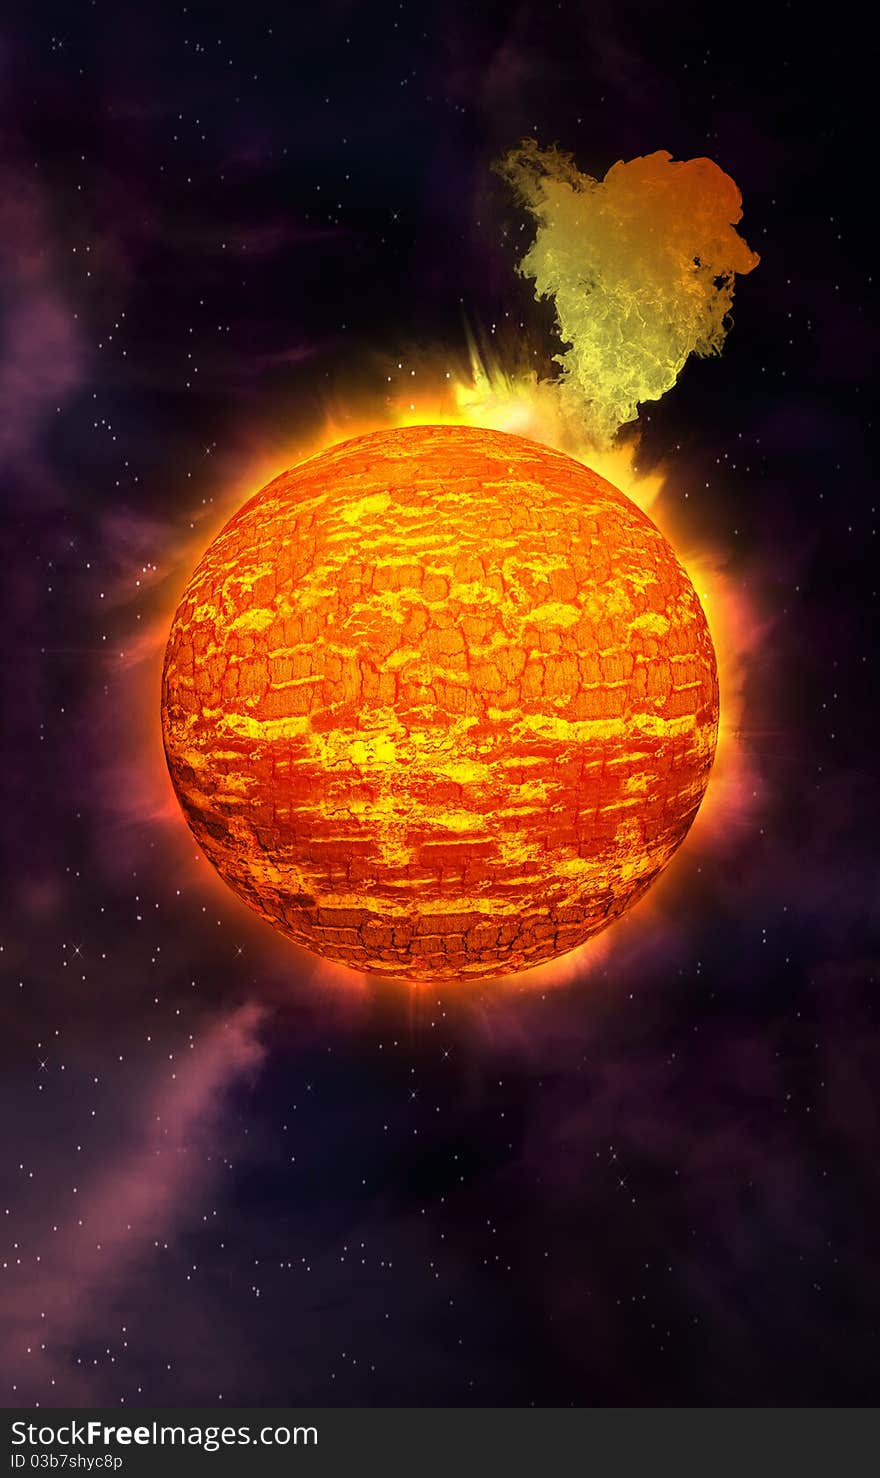 The fantastic closeup of a burning, exploding sun